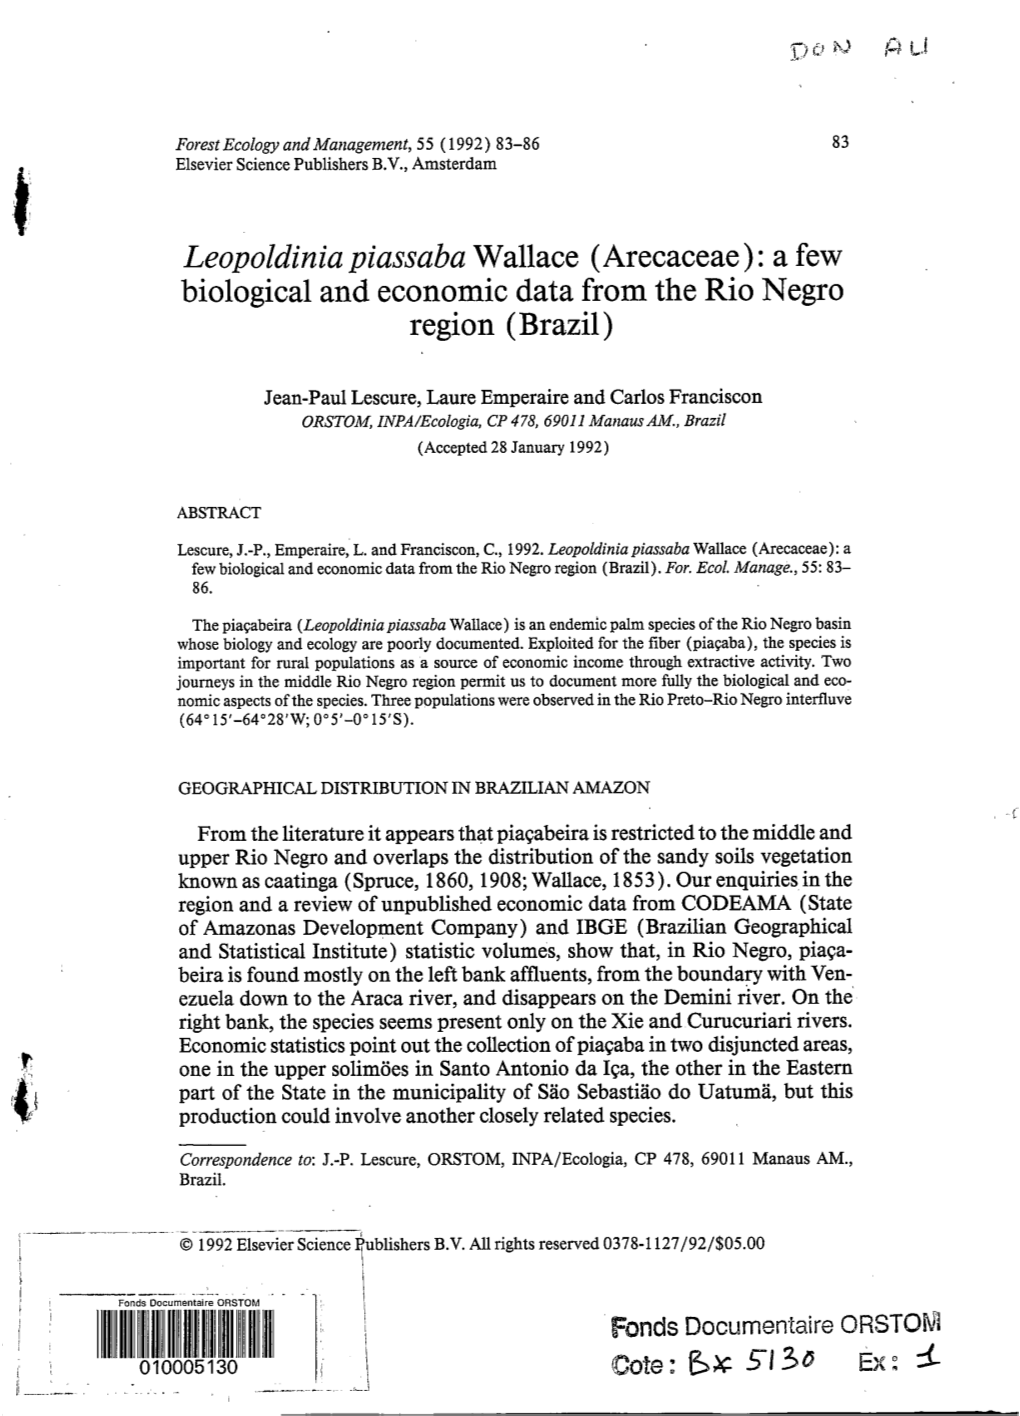 Leopoldinia Piassaba Wallace (Arecaceae): a Few Biological and Economic Data from the Rio Negro Region (Brazil)